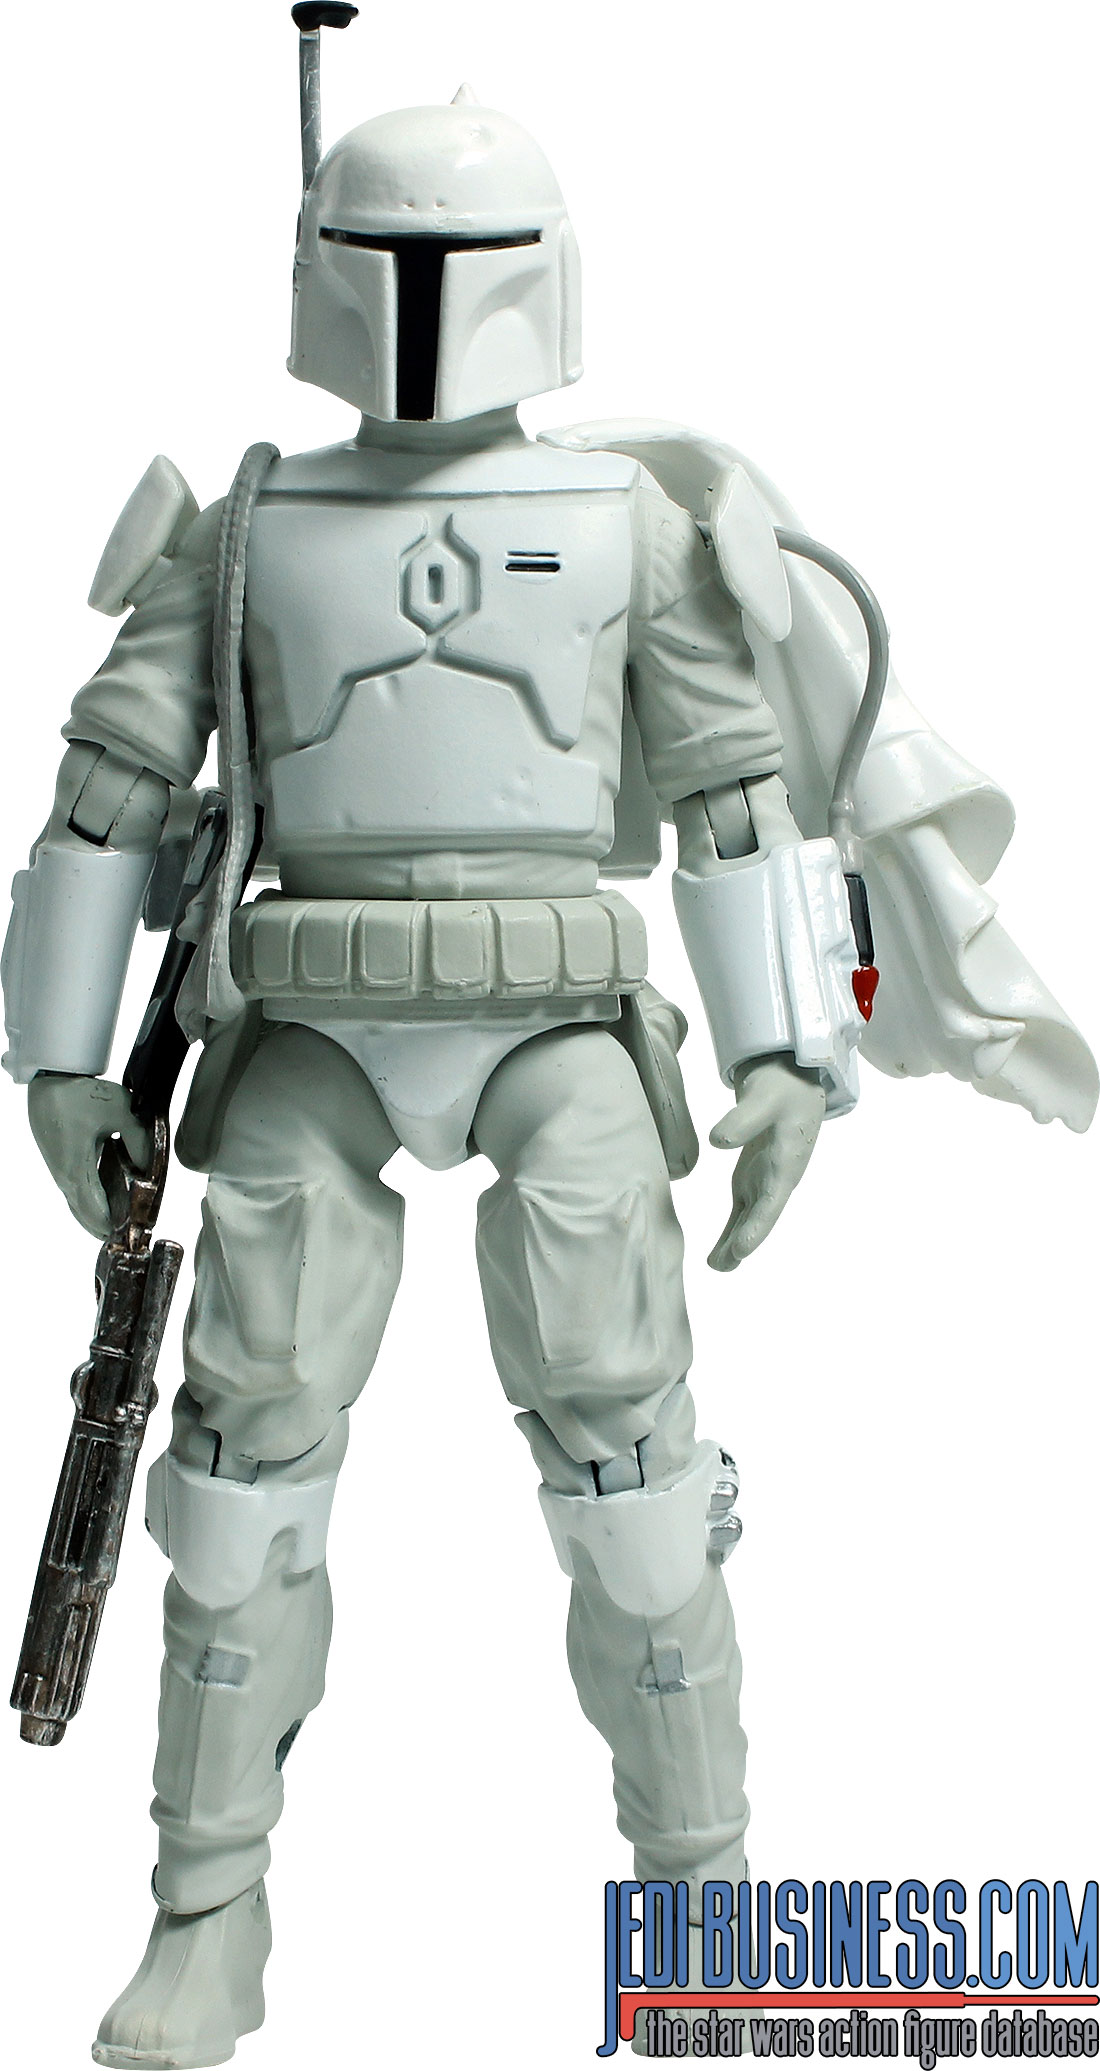 Boba Fett Prototype Armor